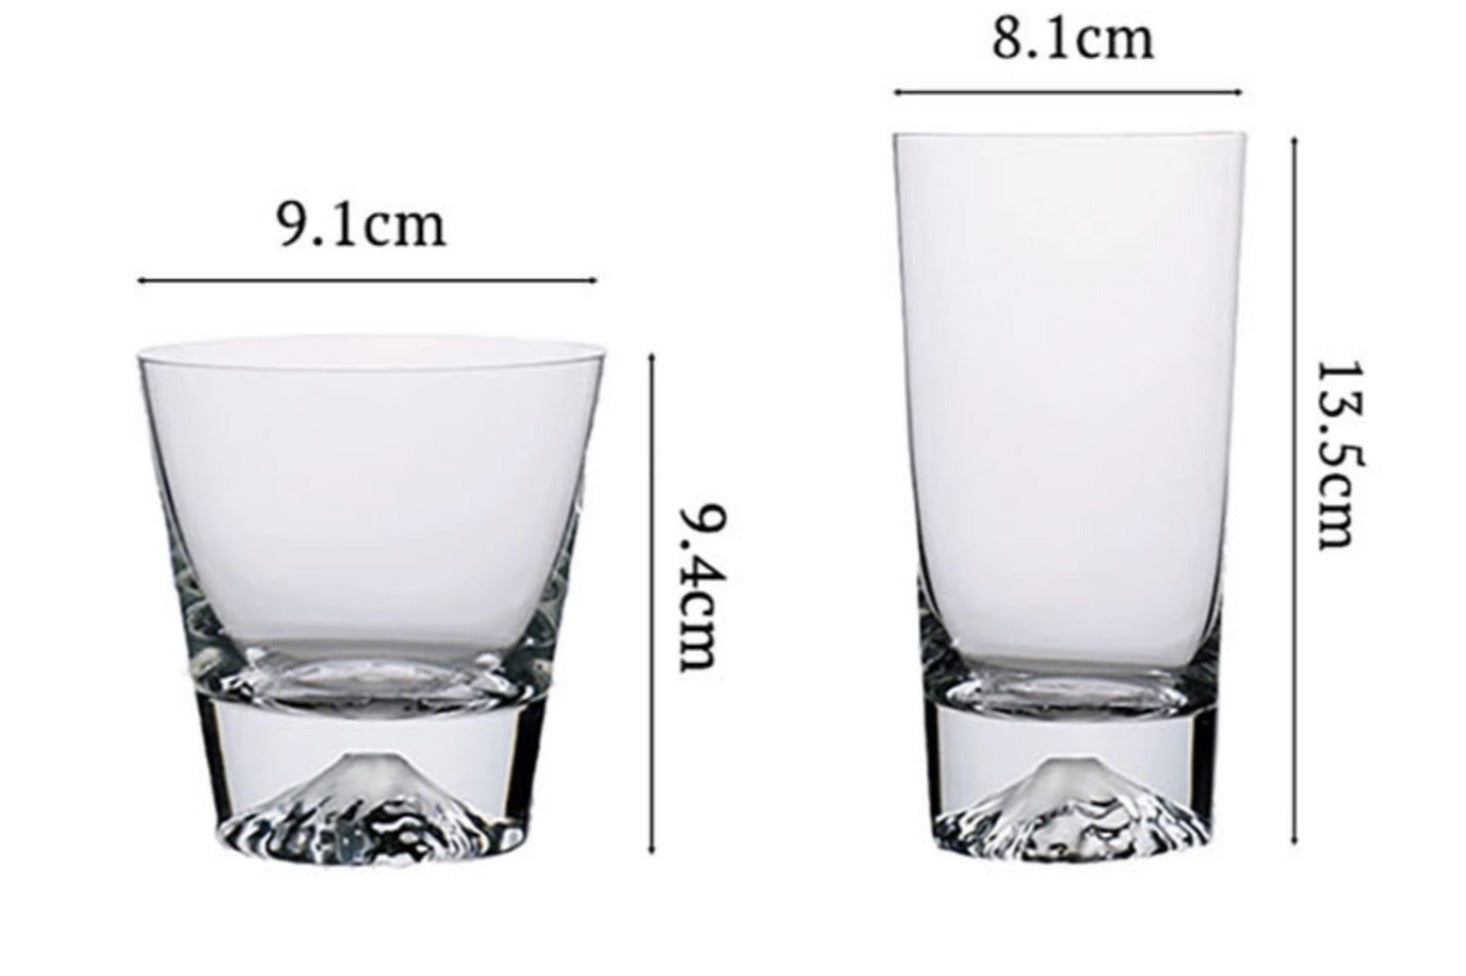 Premium Mount Fuji Whiskey Glass